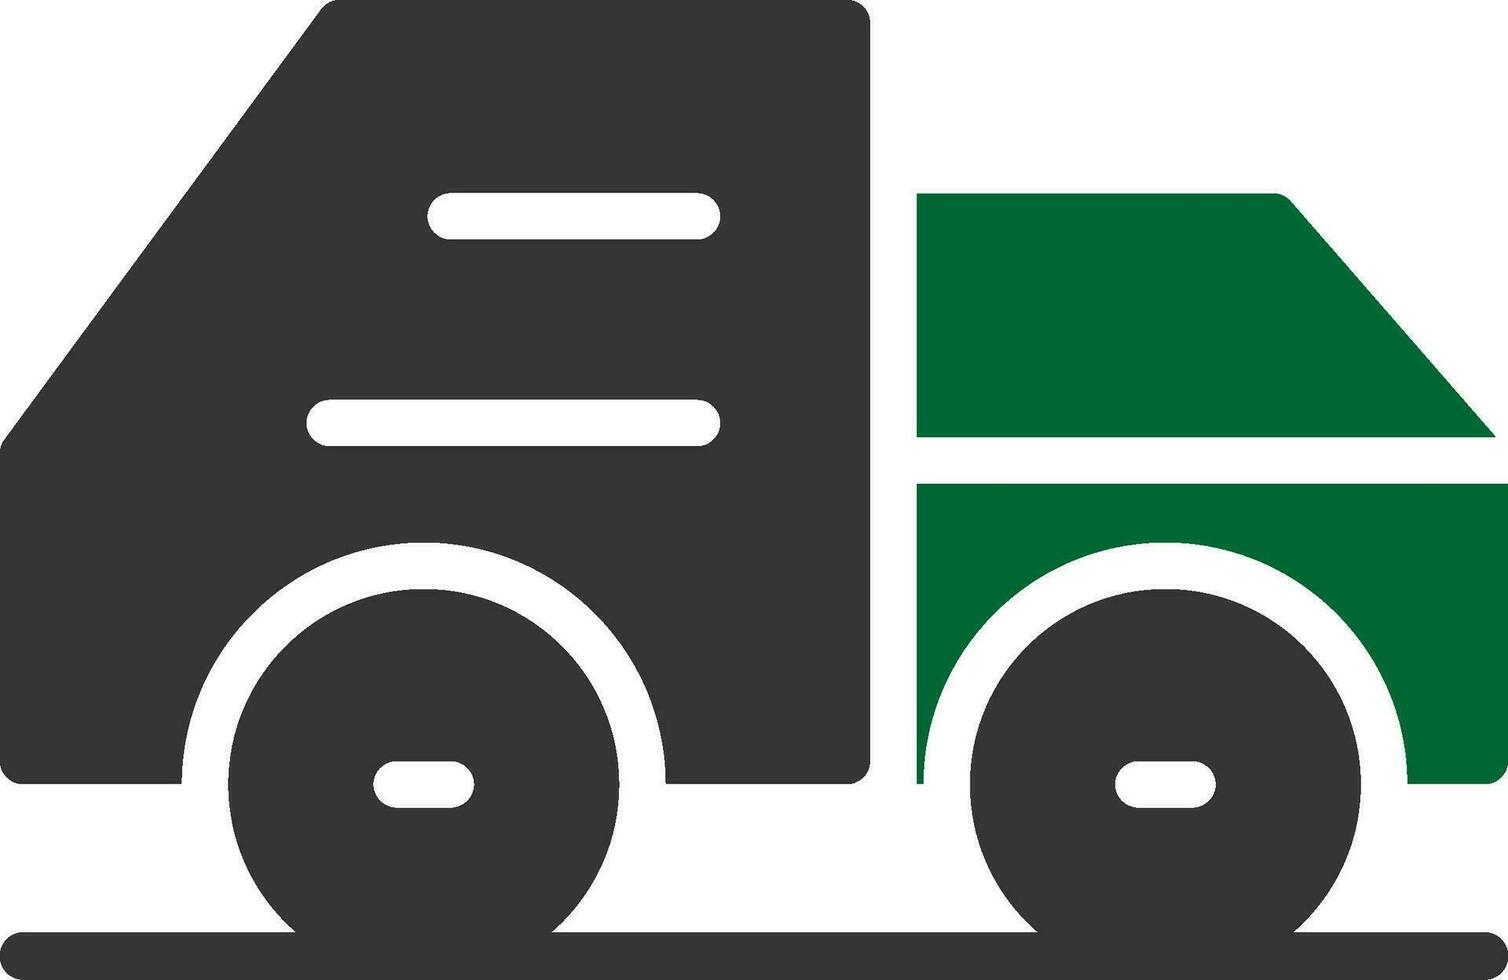 Garbage Truck Creative Icon Design vector